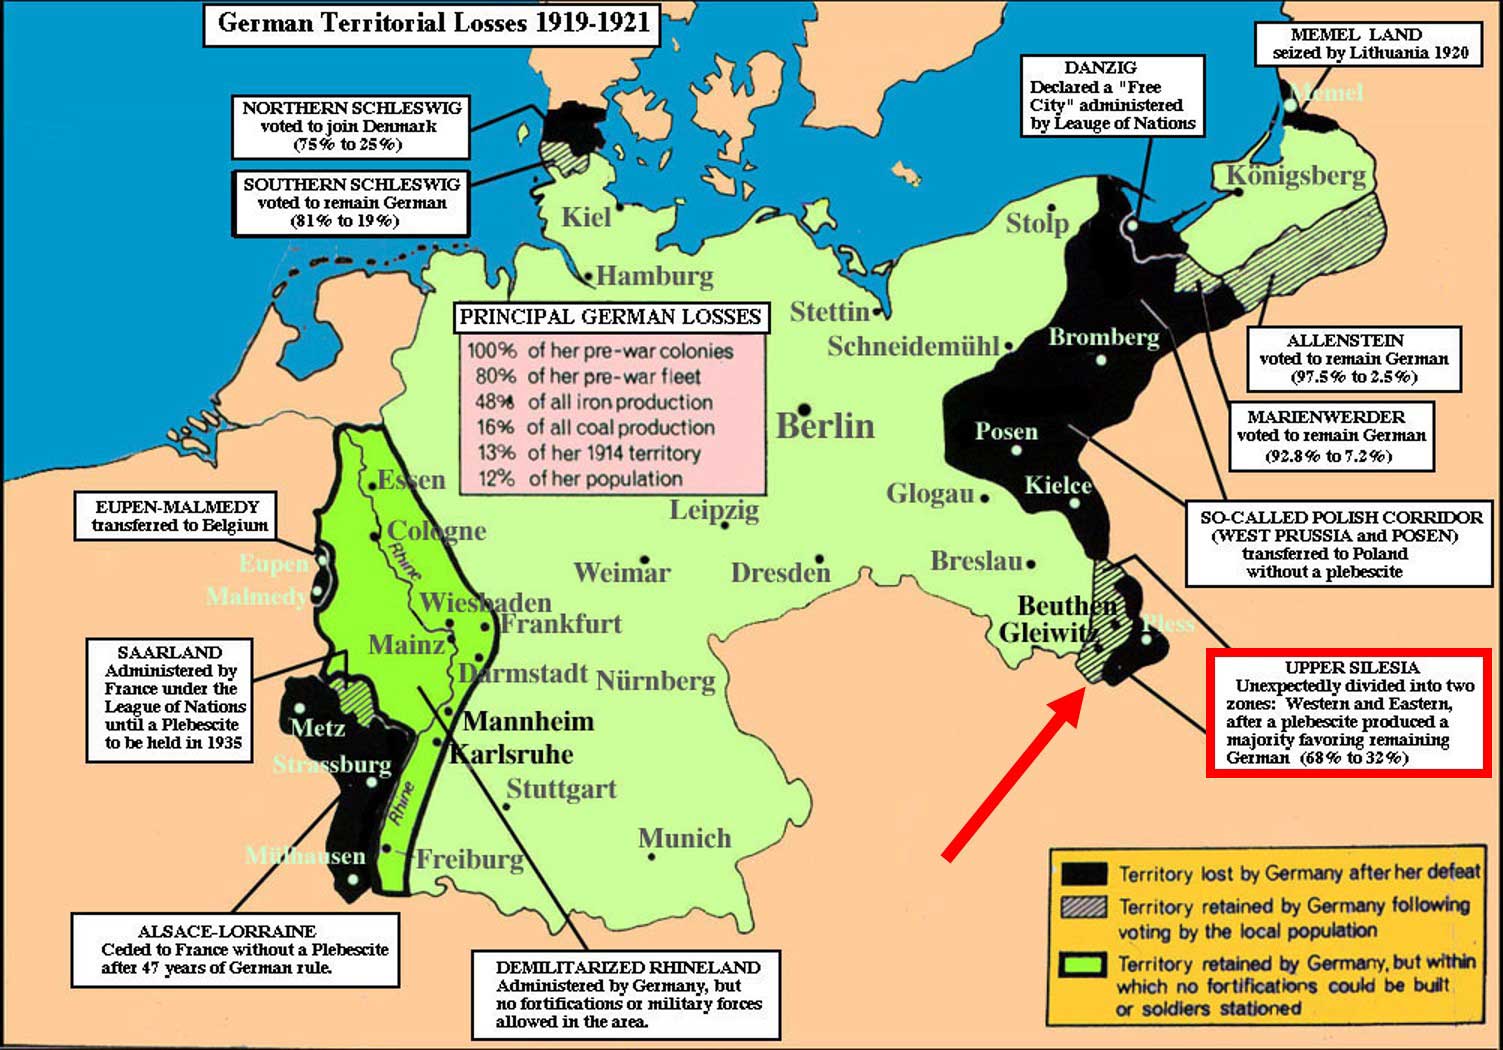 1. Territori tedeschi persi a occidente e a oriente 1919-1921.